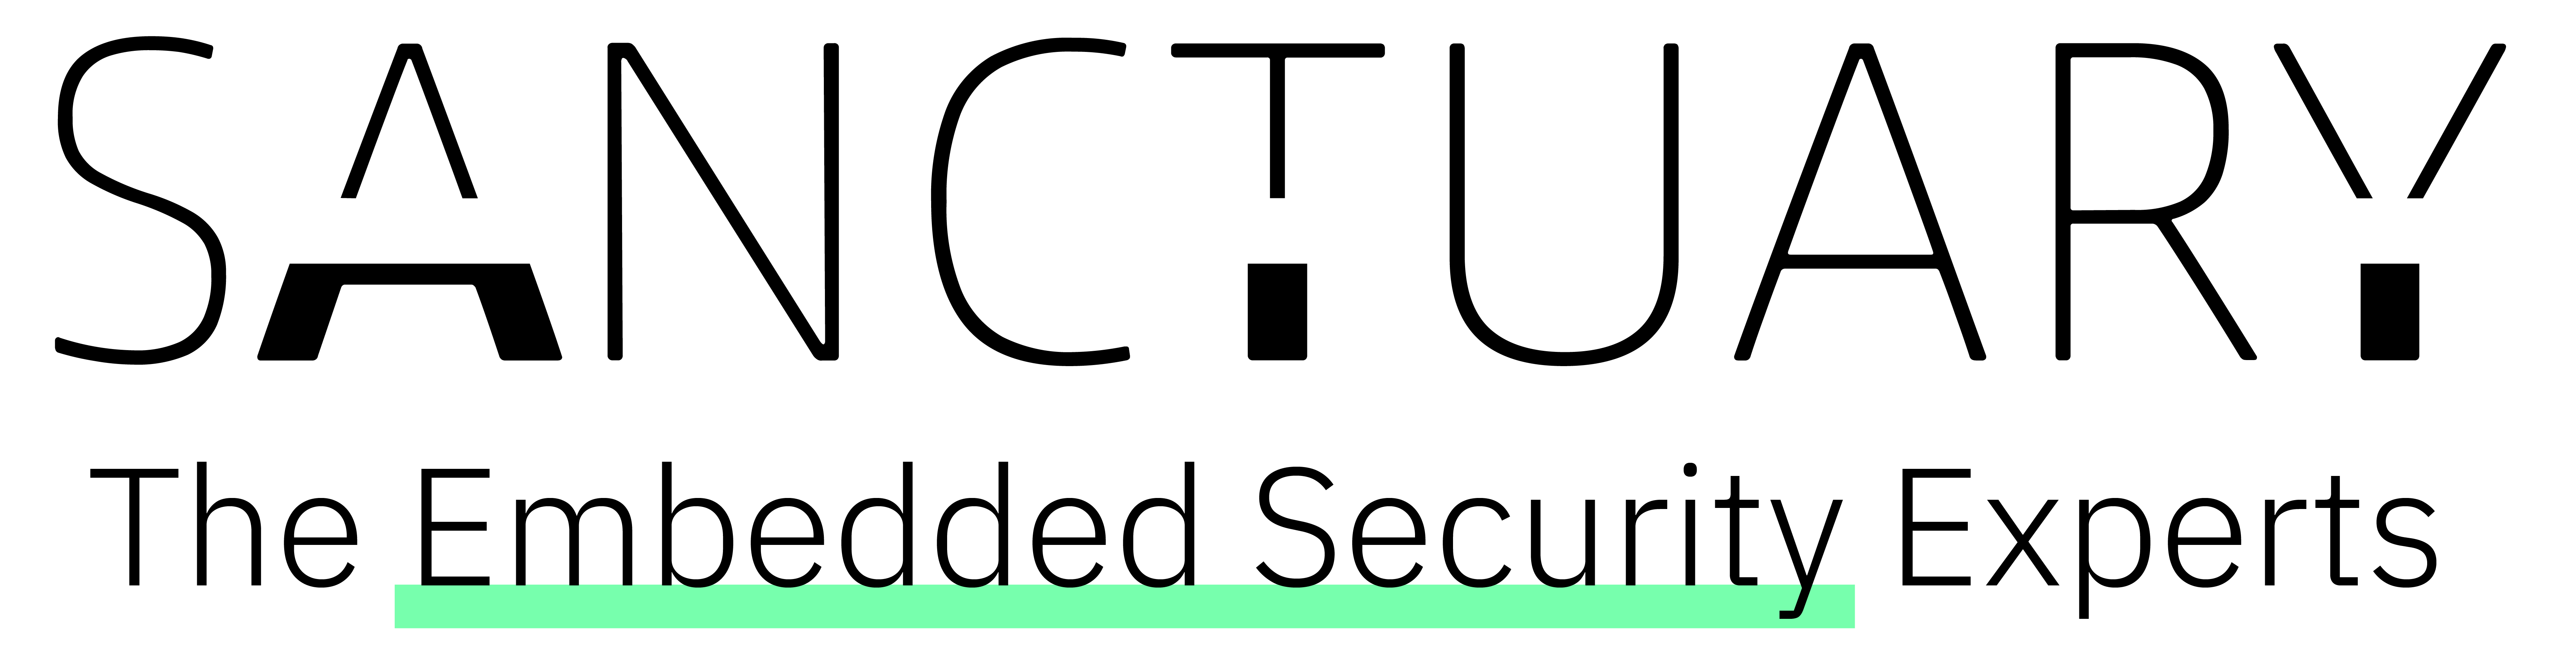 sanctuary experts logo